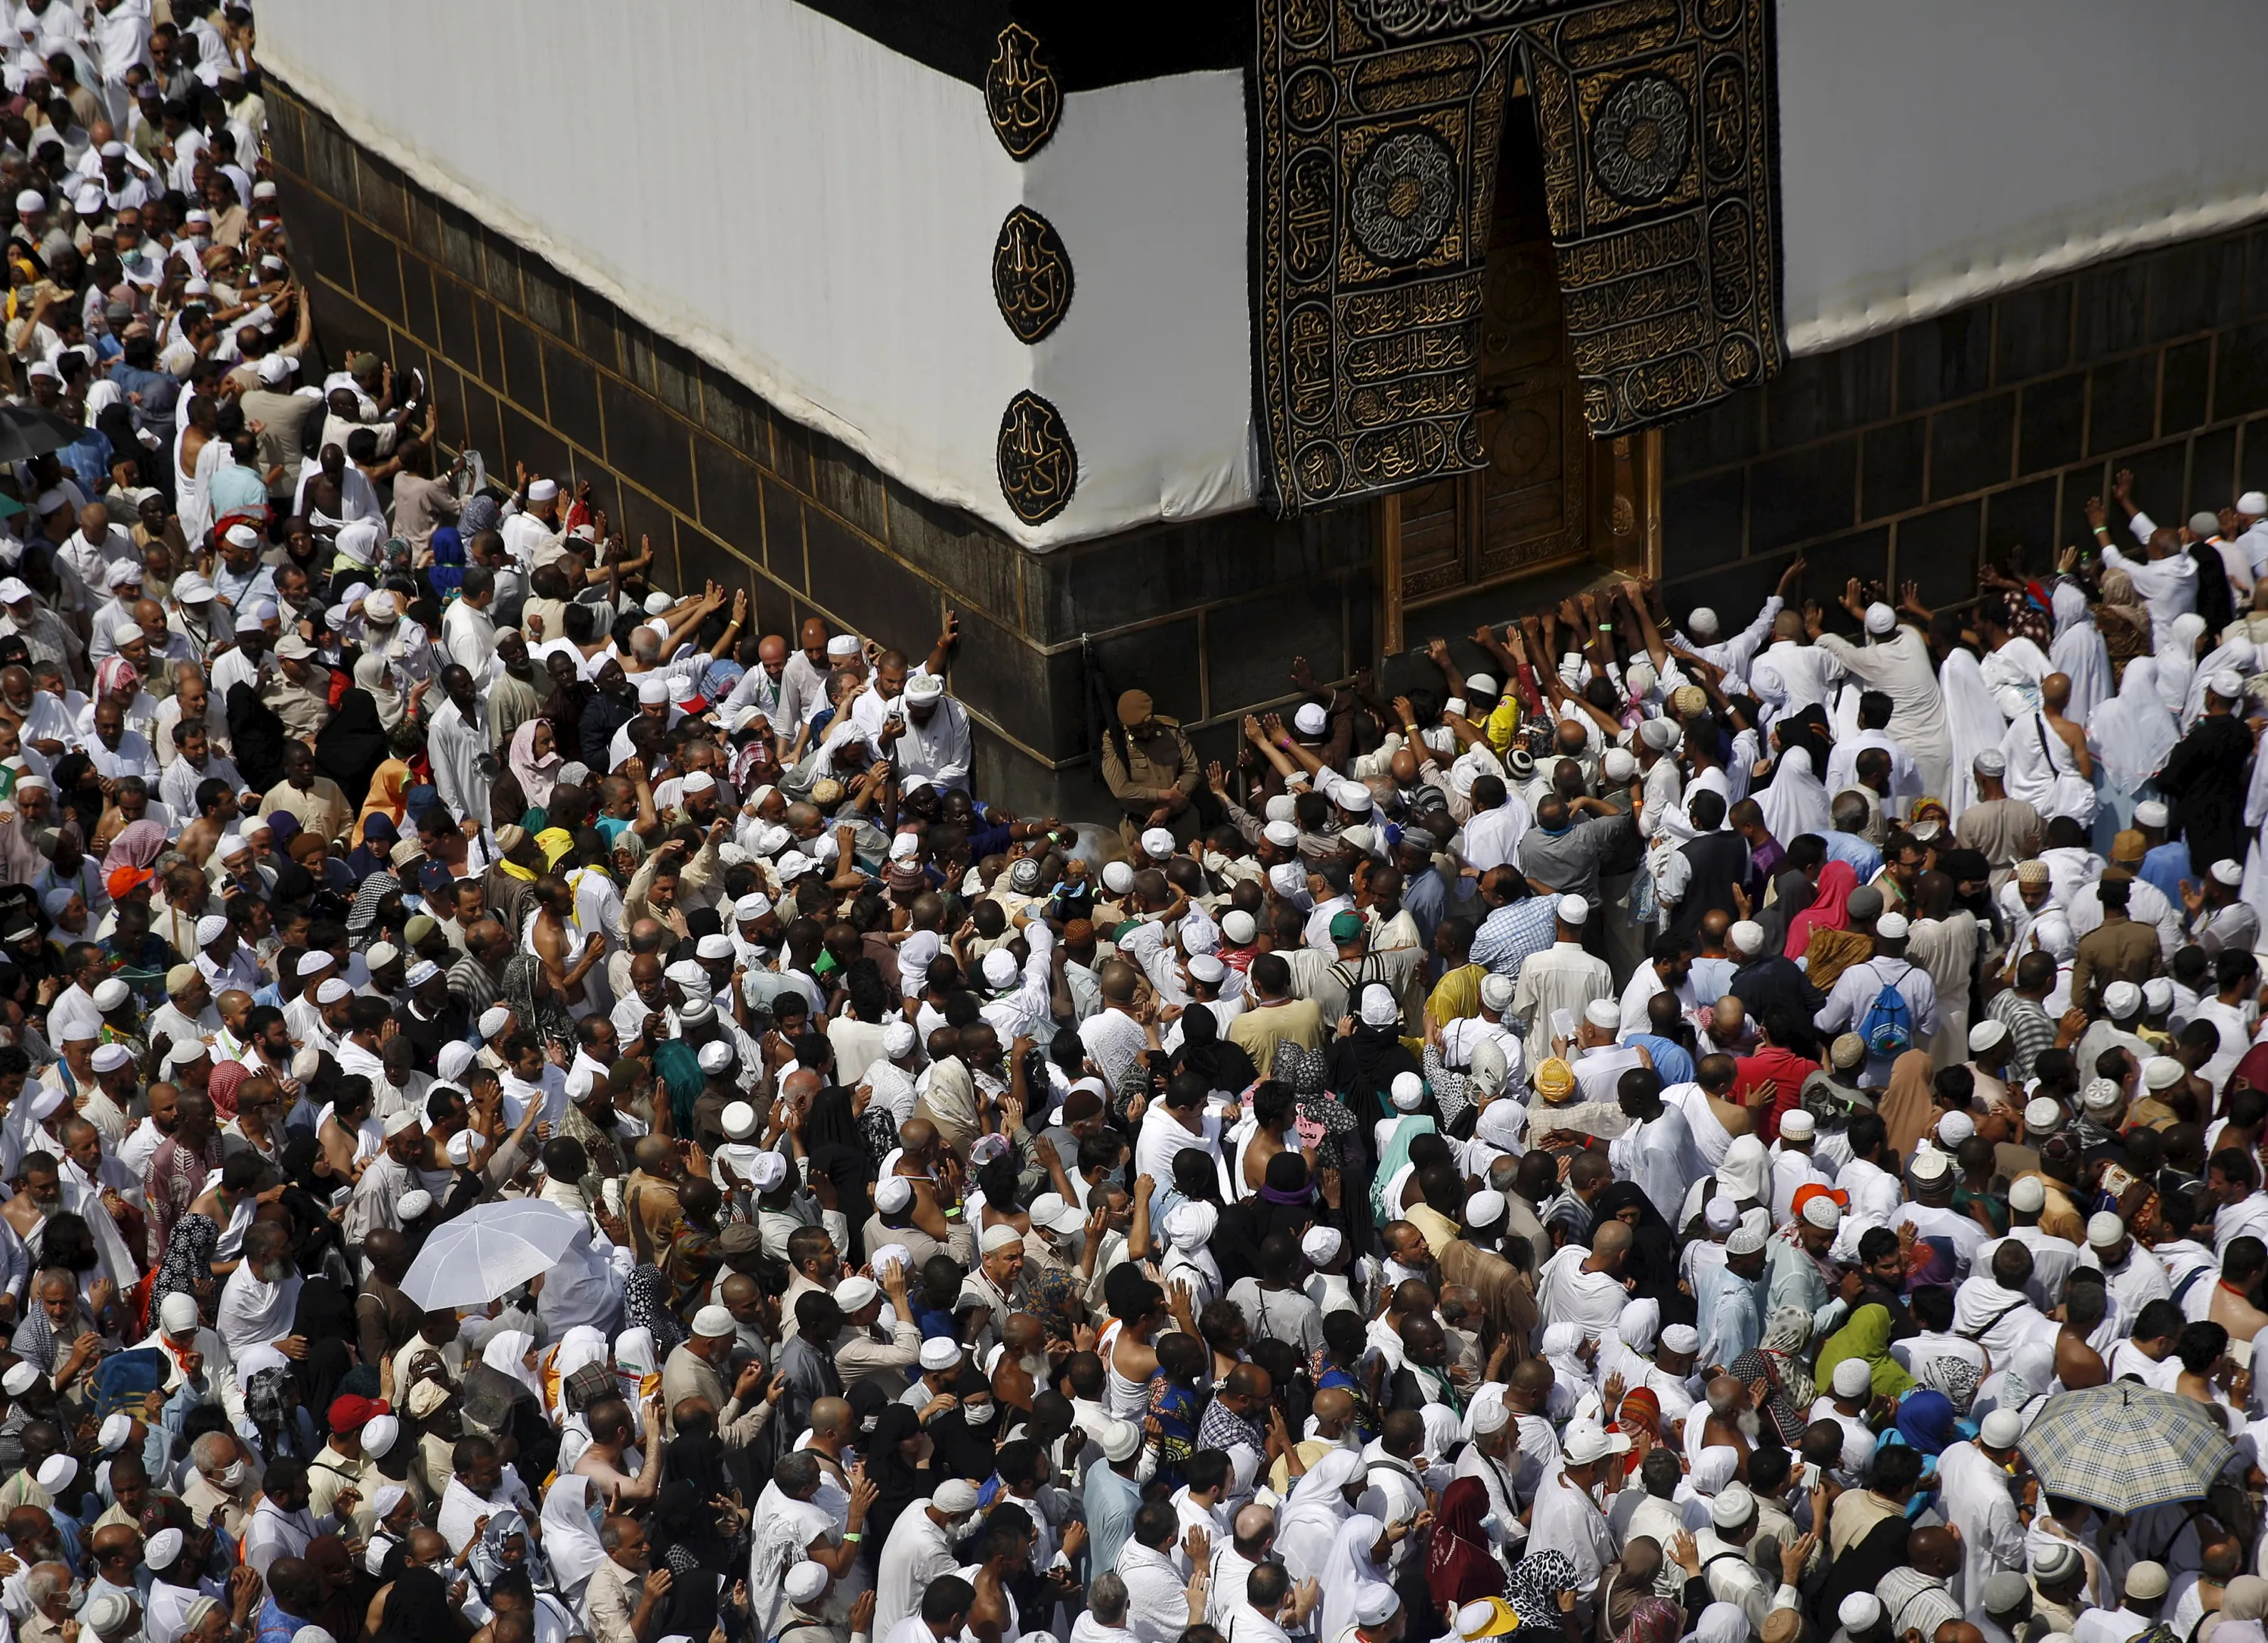 Мусульманин совершает хадж. Паломничество мусульман в Мекку. Курбан-байрам Кааба. Место паломничества мусульман в Мекке. Обряд хаджа (паломничества) в Мекке.